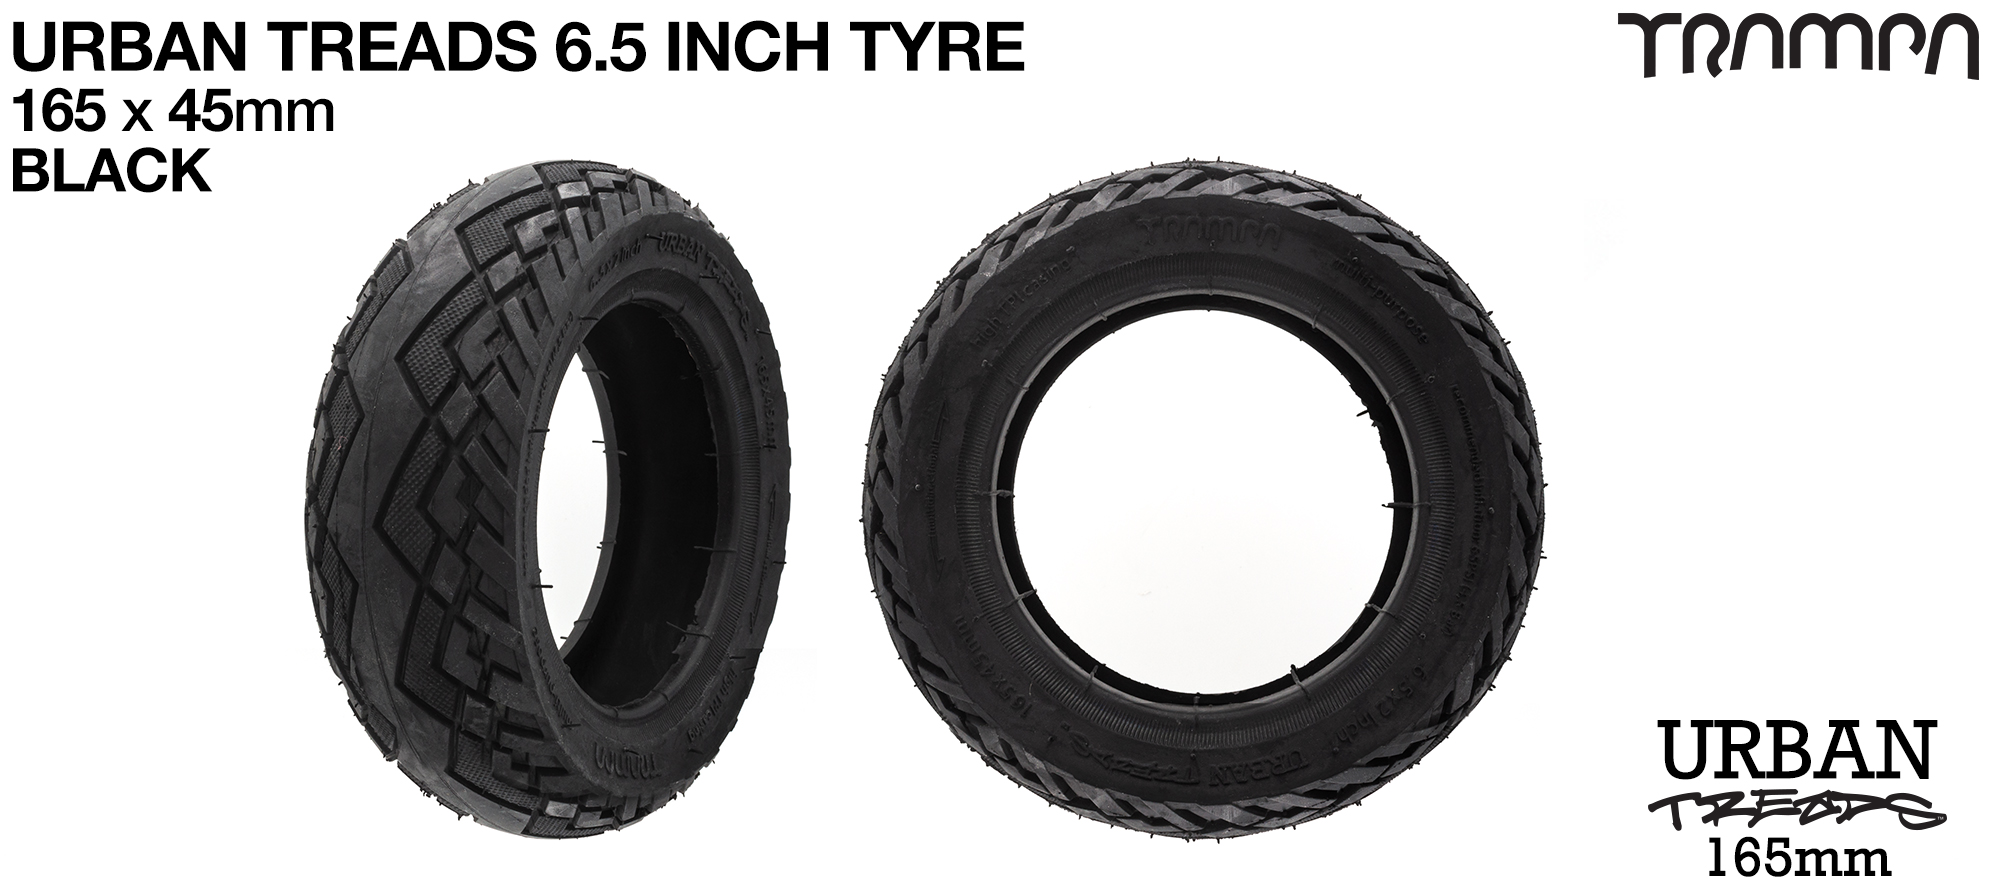 6 Inch URBAN TREAD Tyres - BLACK 